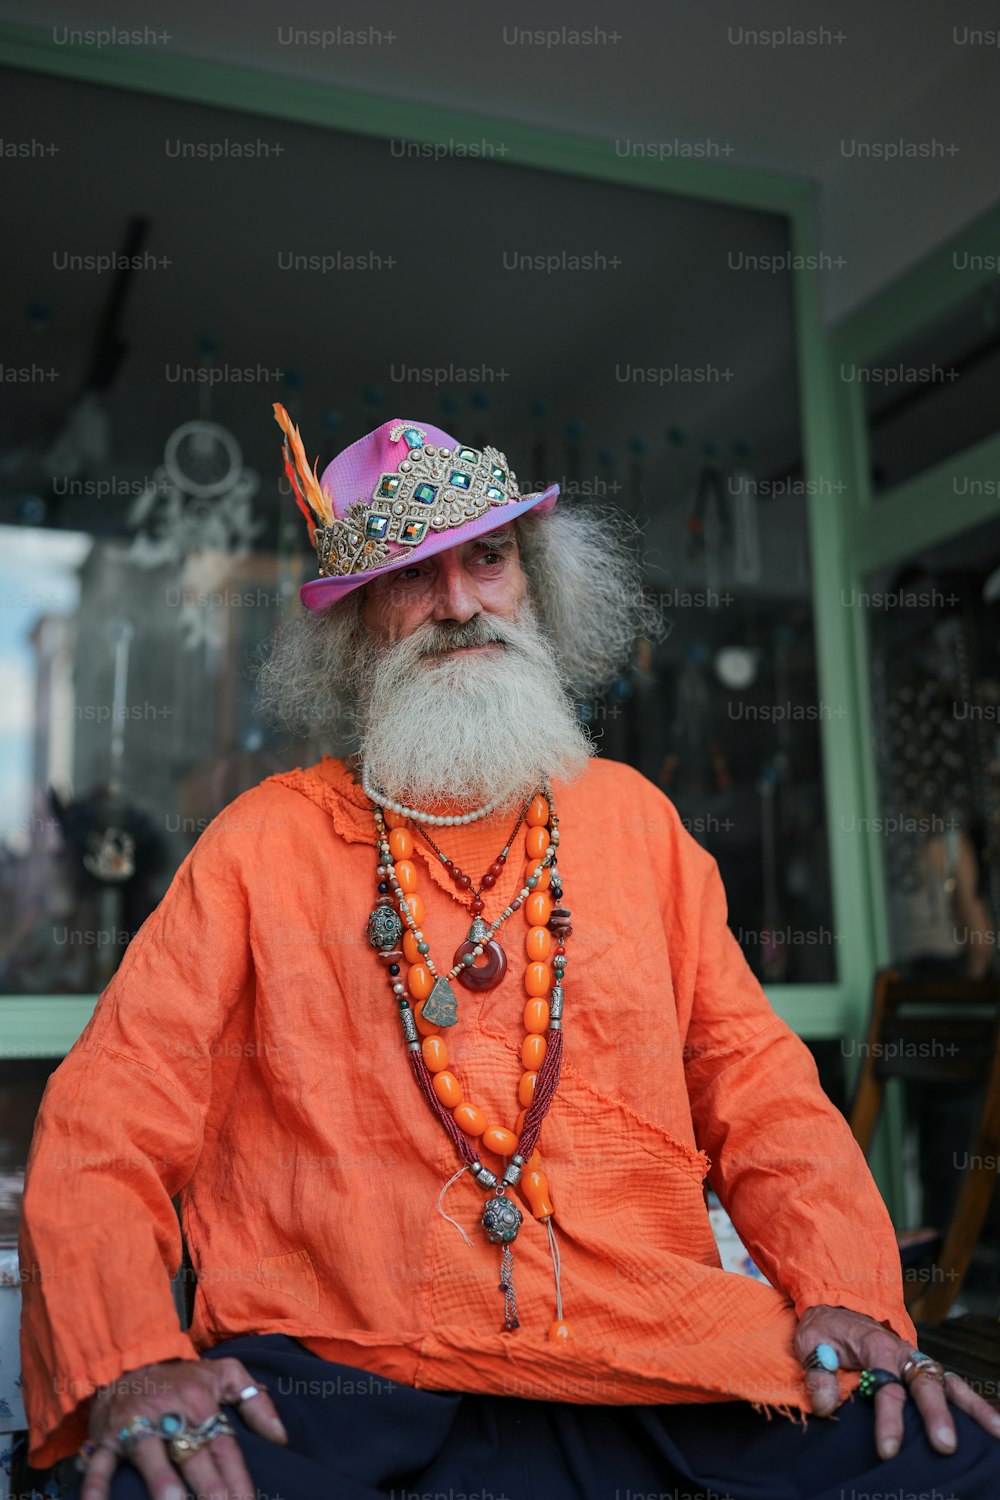 a man with a long beard wearing an orange shirt and a purple hat